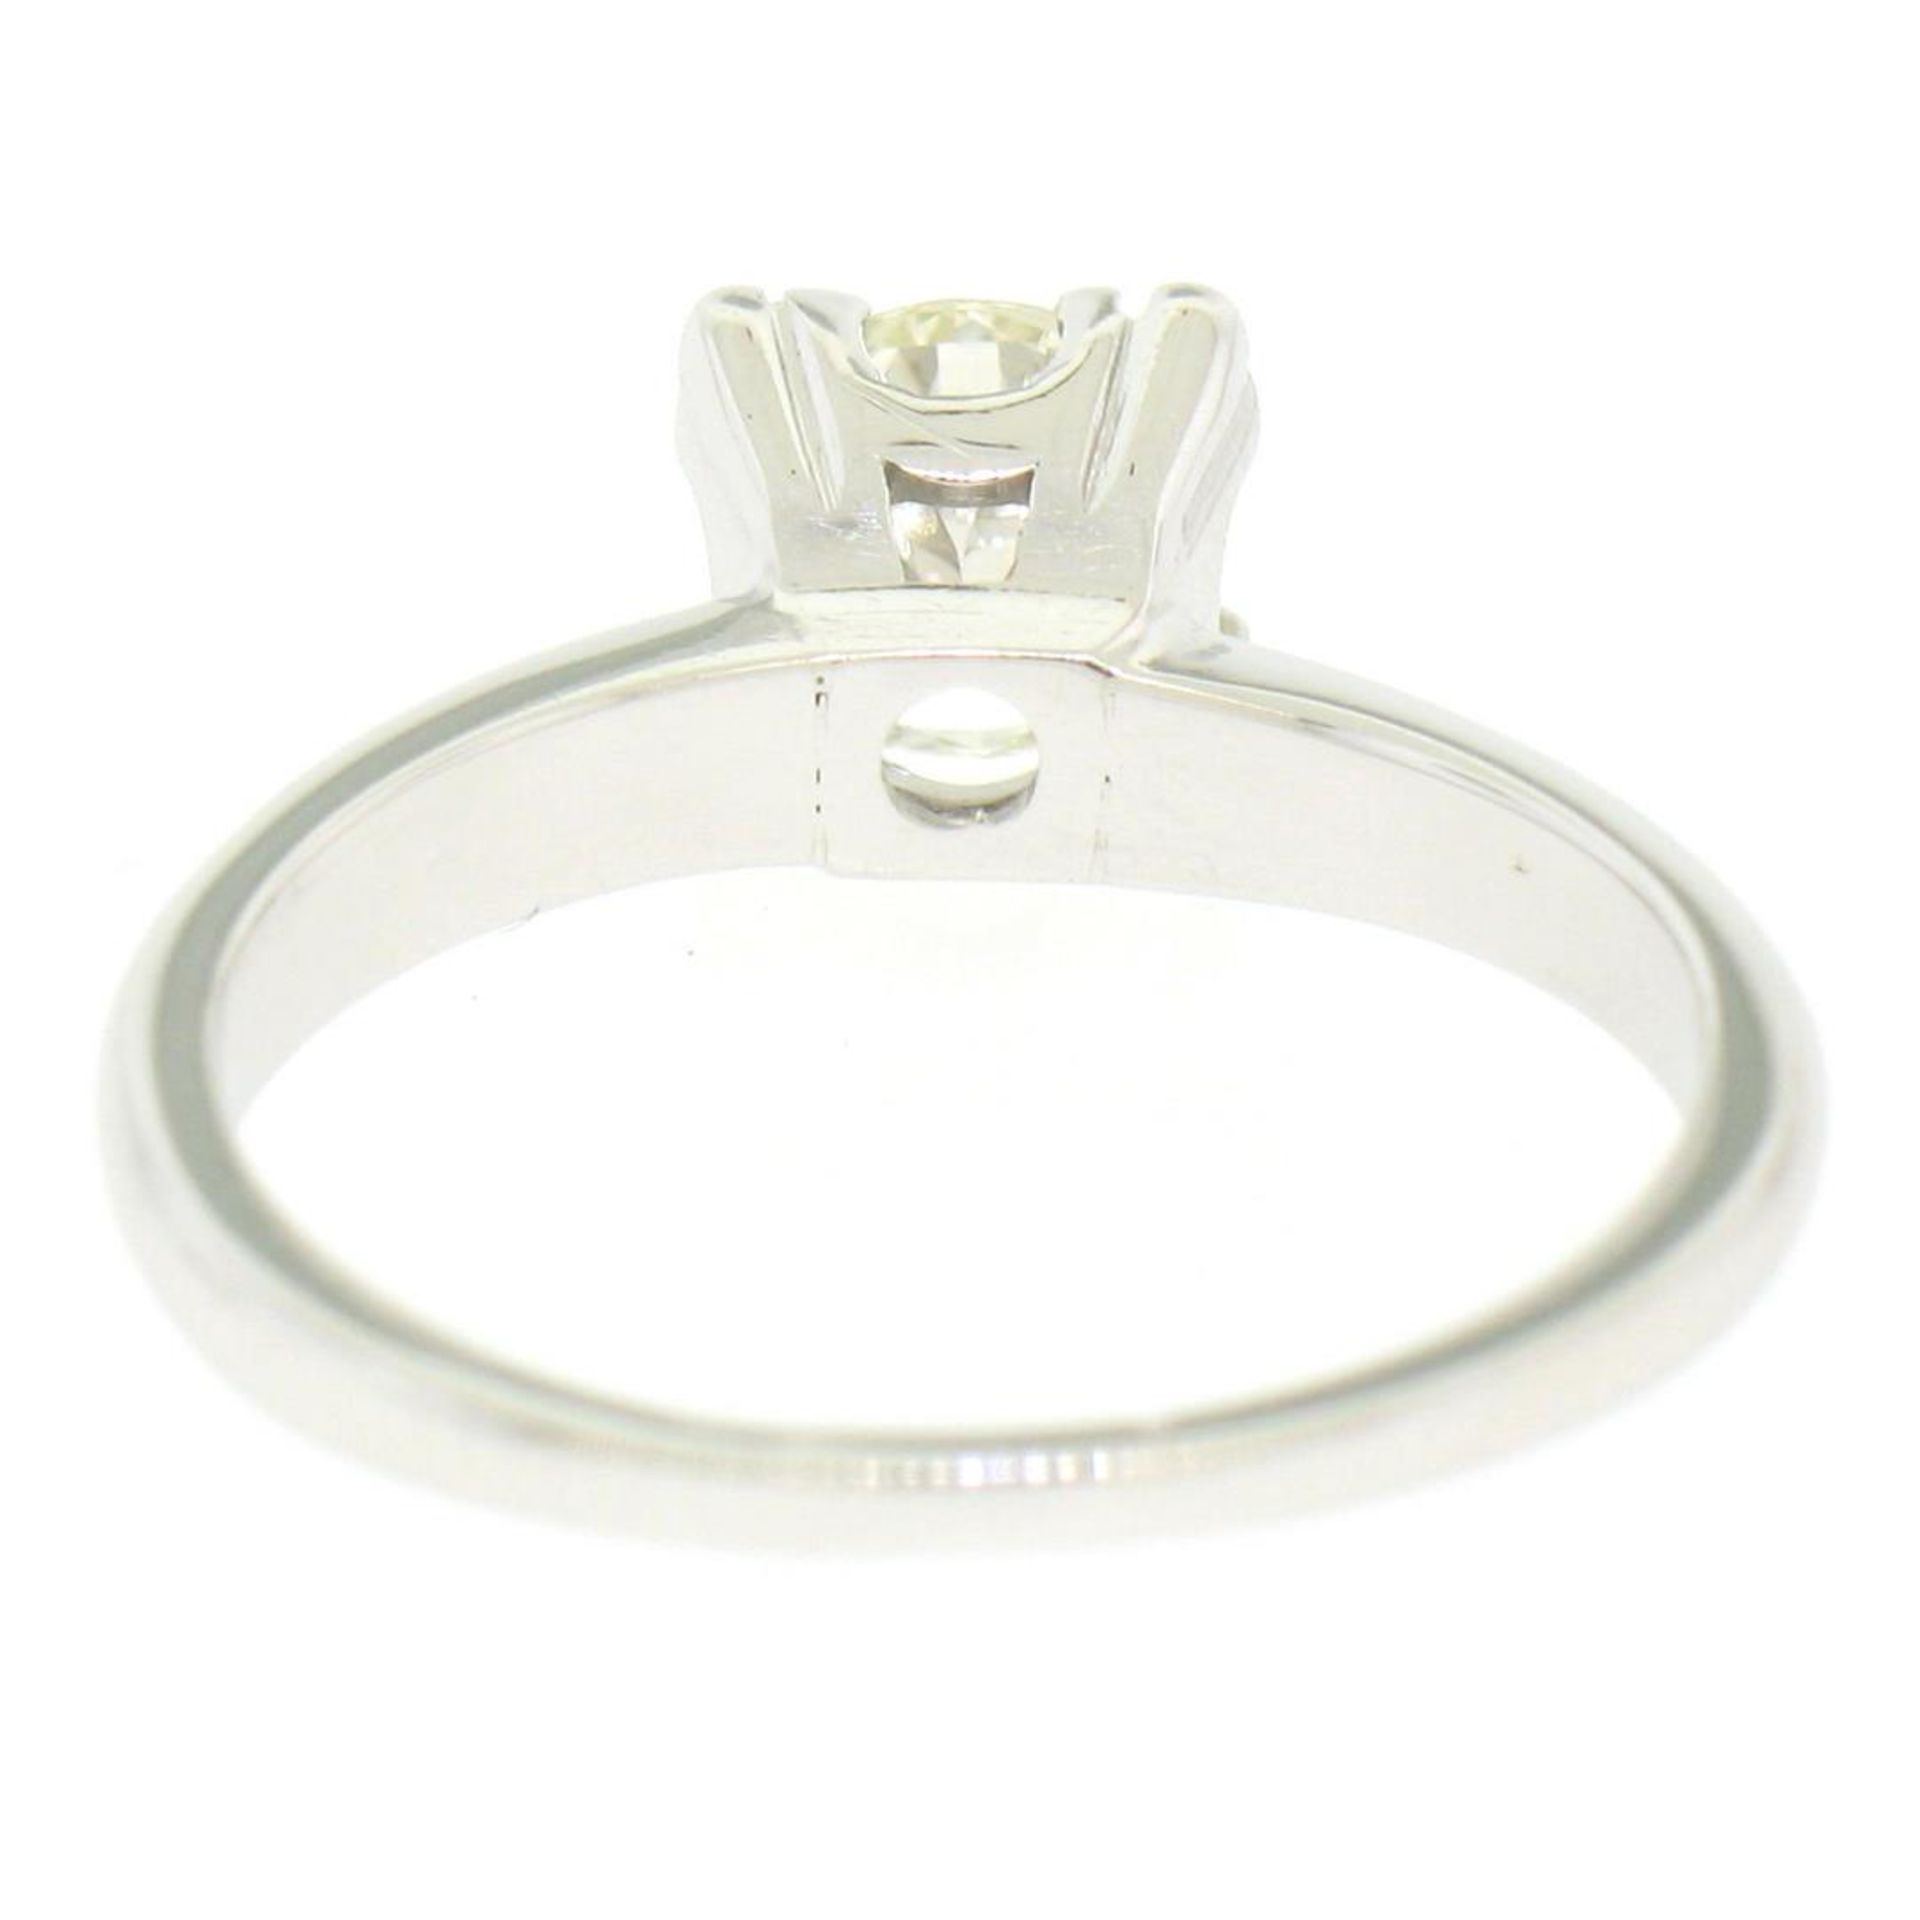 14k White Gold 0.83 ct I VVS2 Round Brilliant Cut Diamond Solitaire Ring - Image 7 of 7